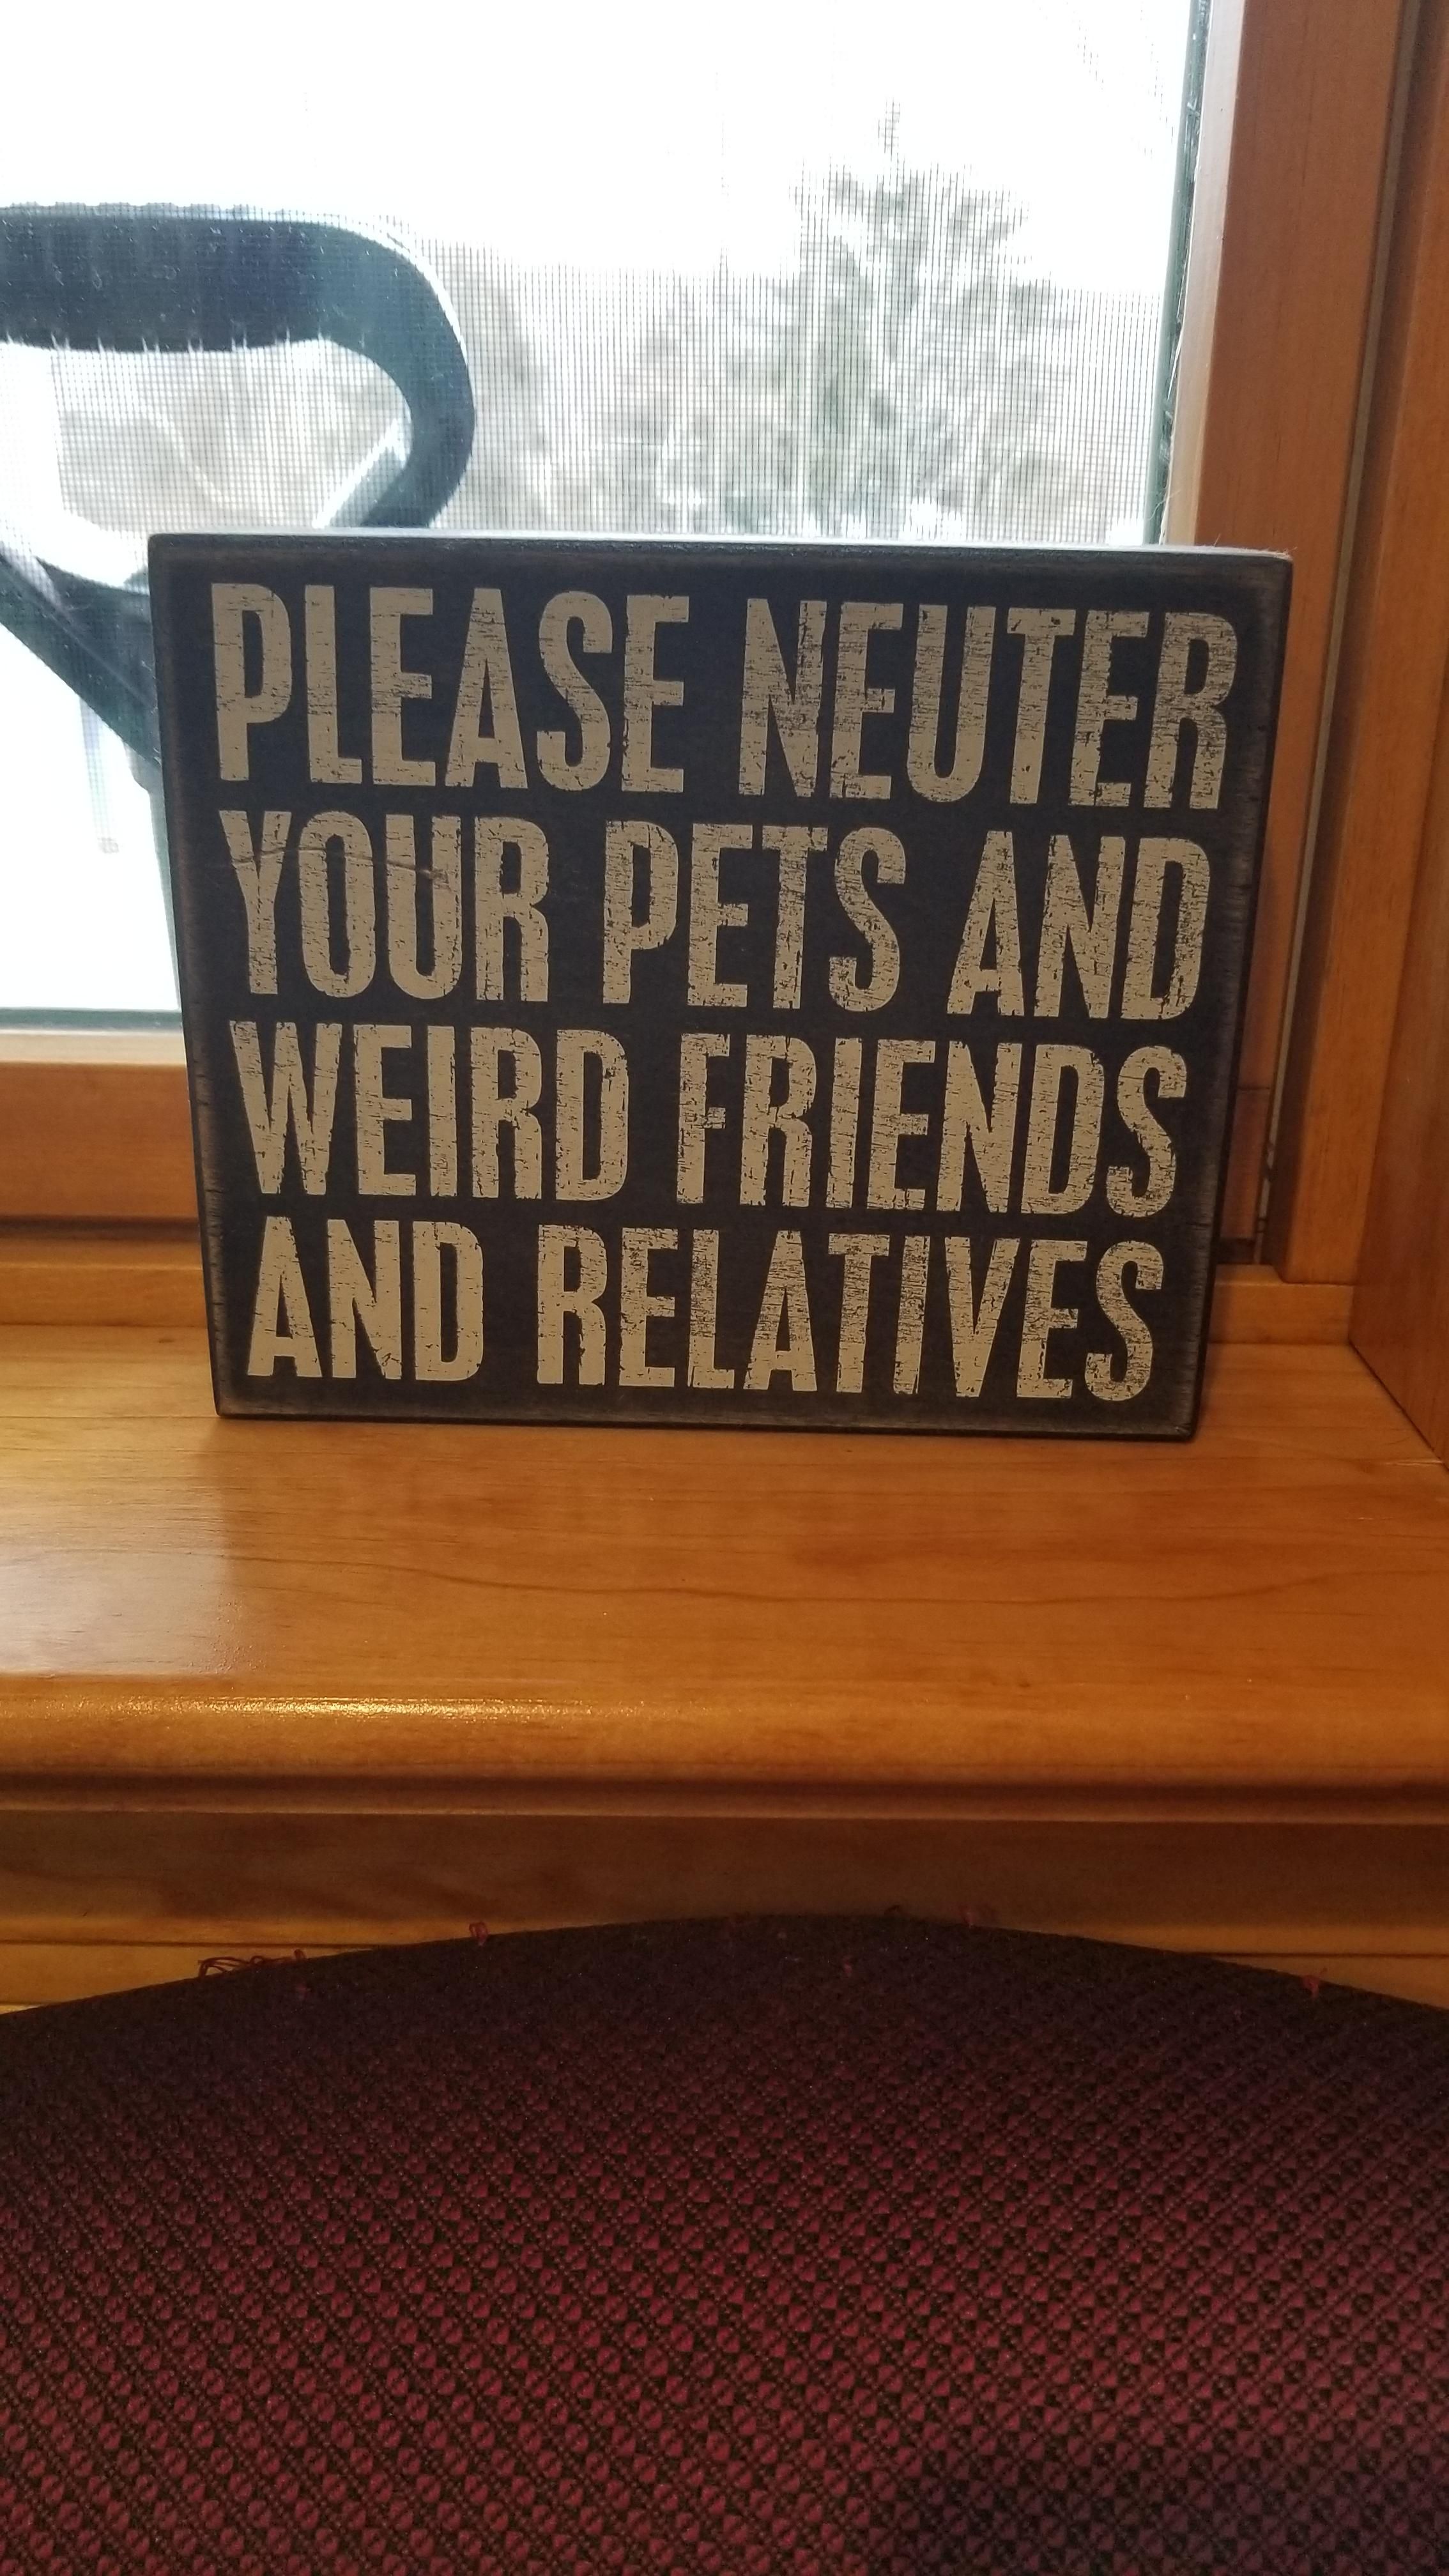 This sign at my vet